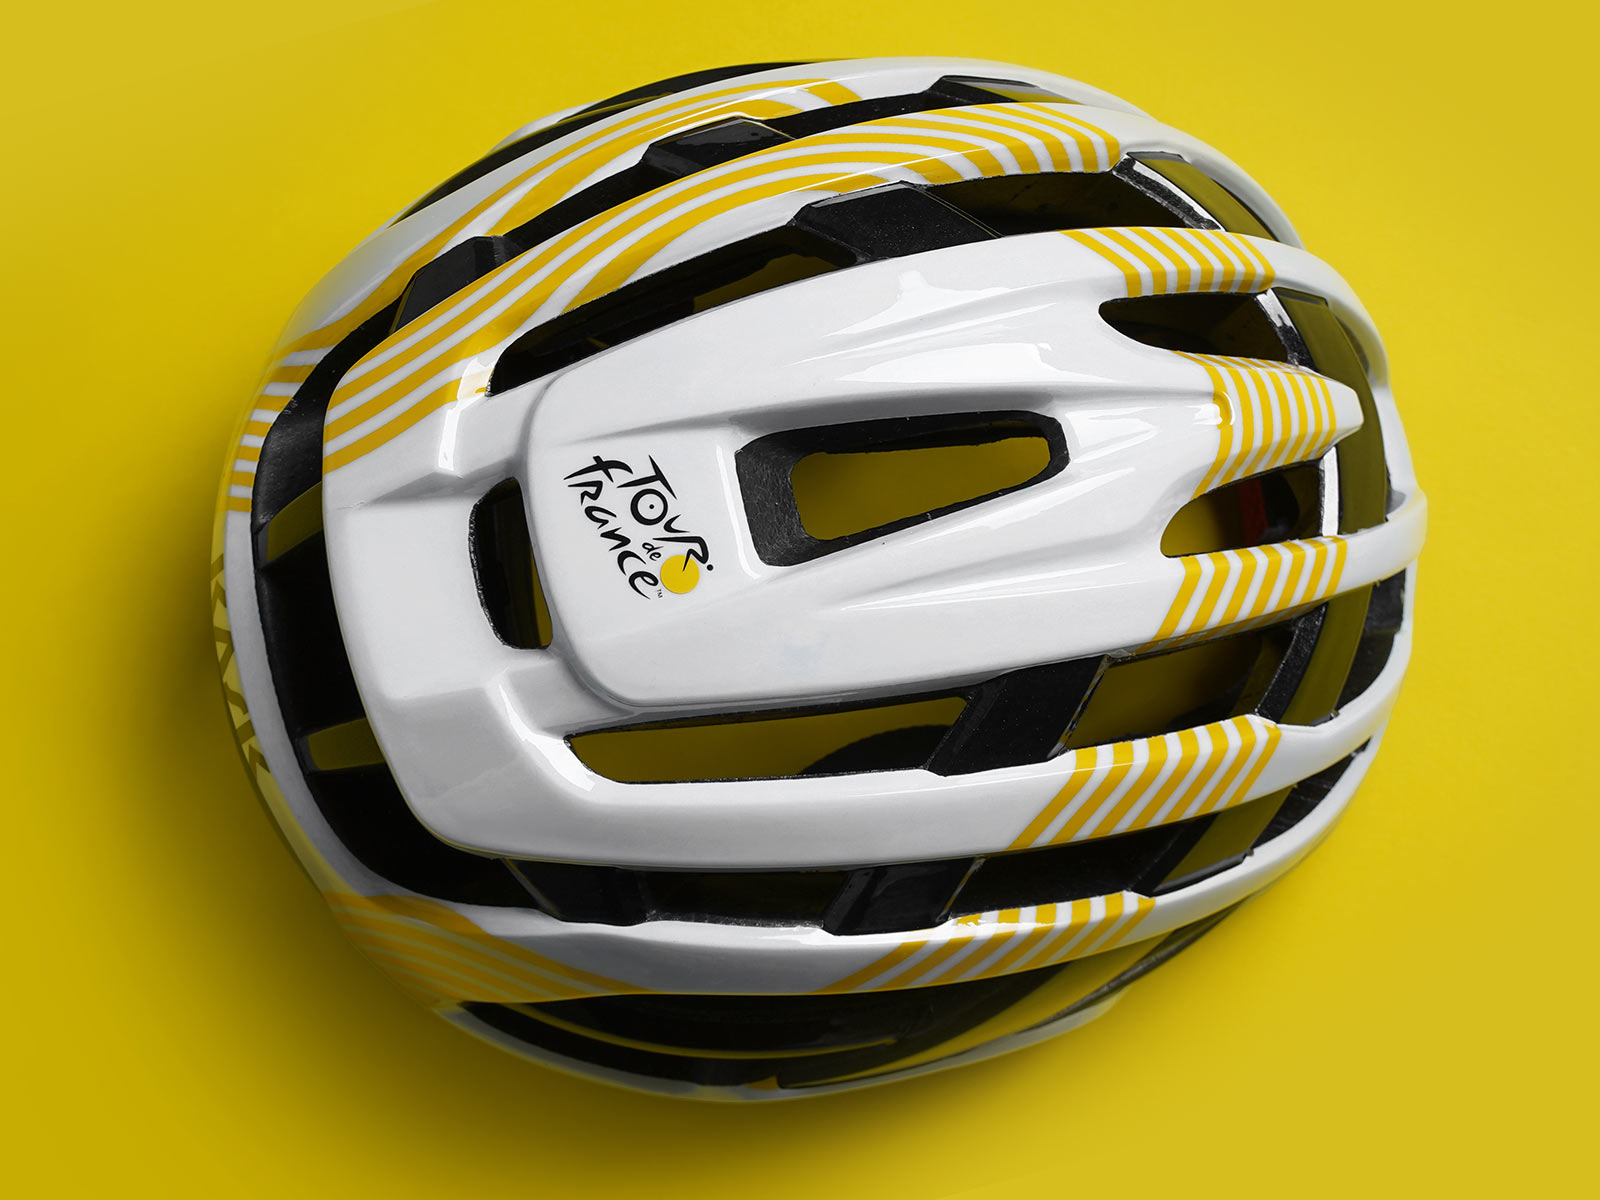 Kask Valegro Tour de France limited edition lightweight vented road bike helmet, top